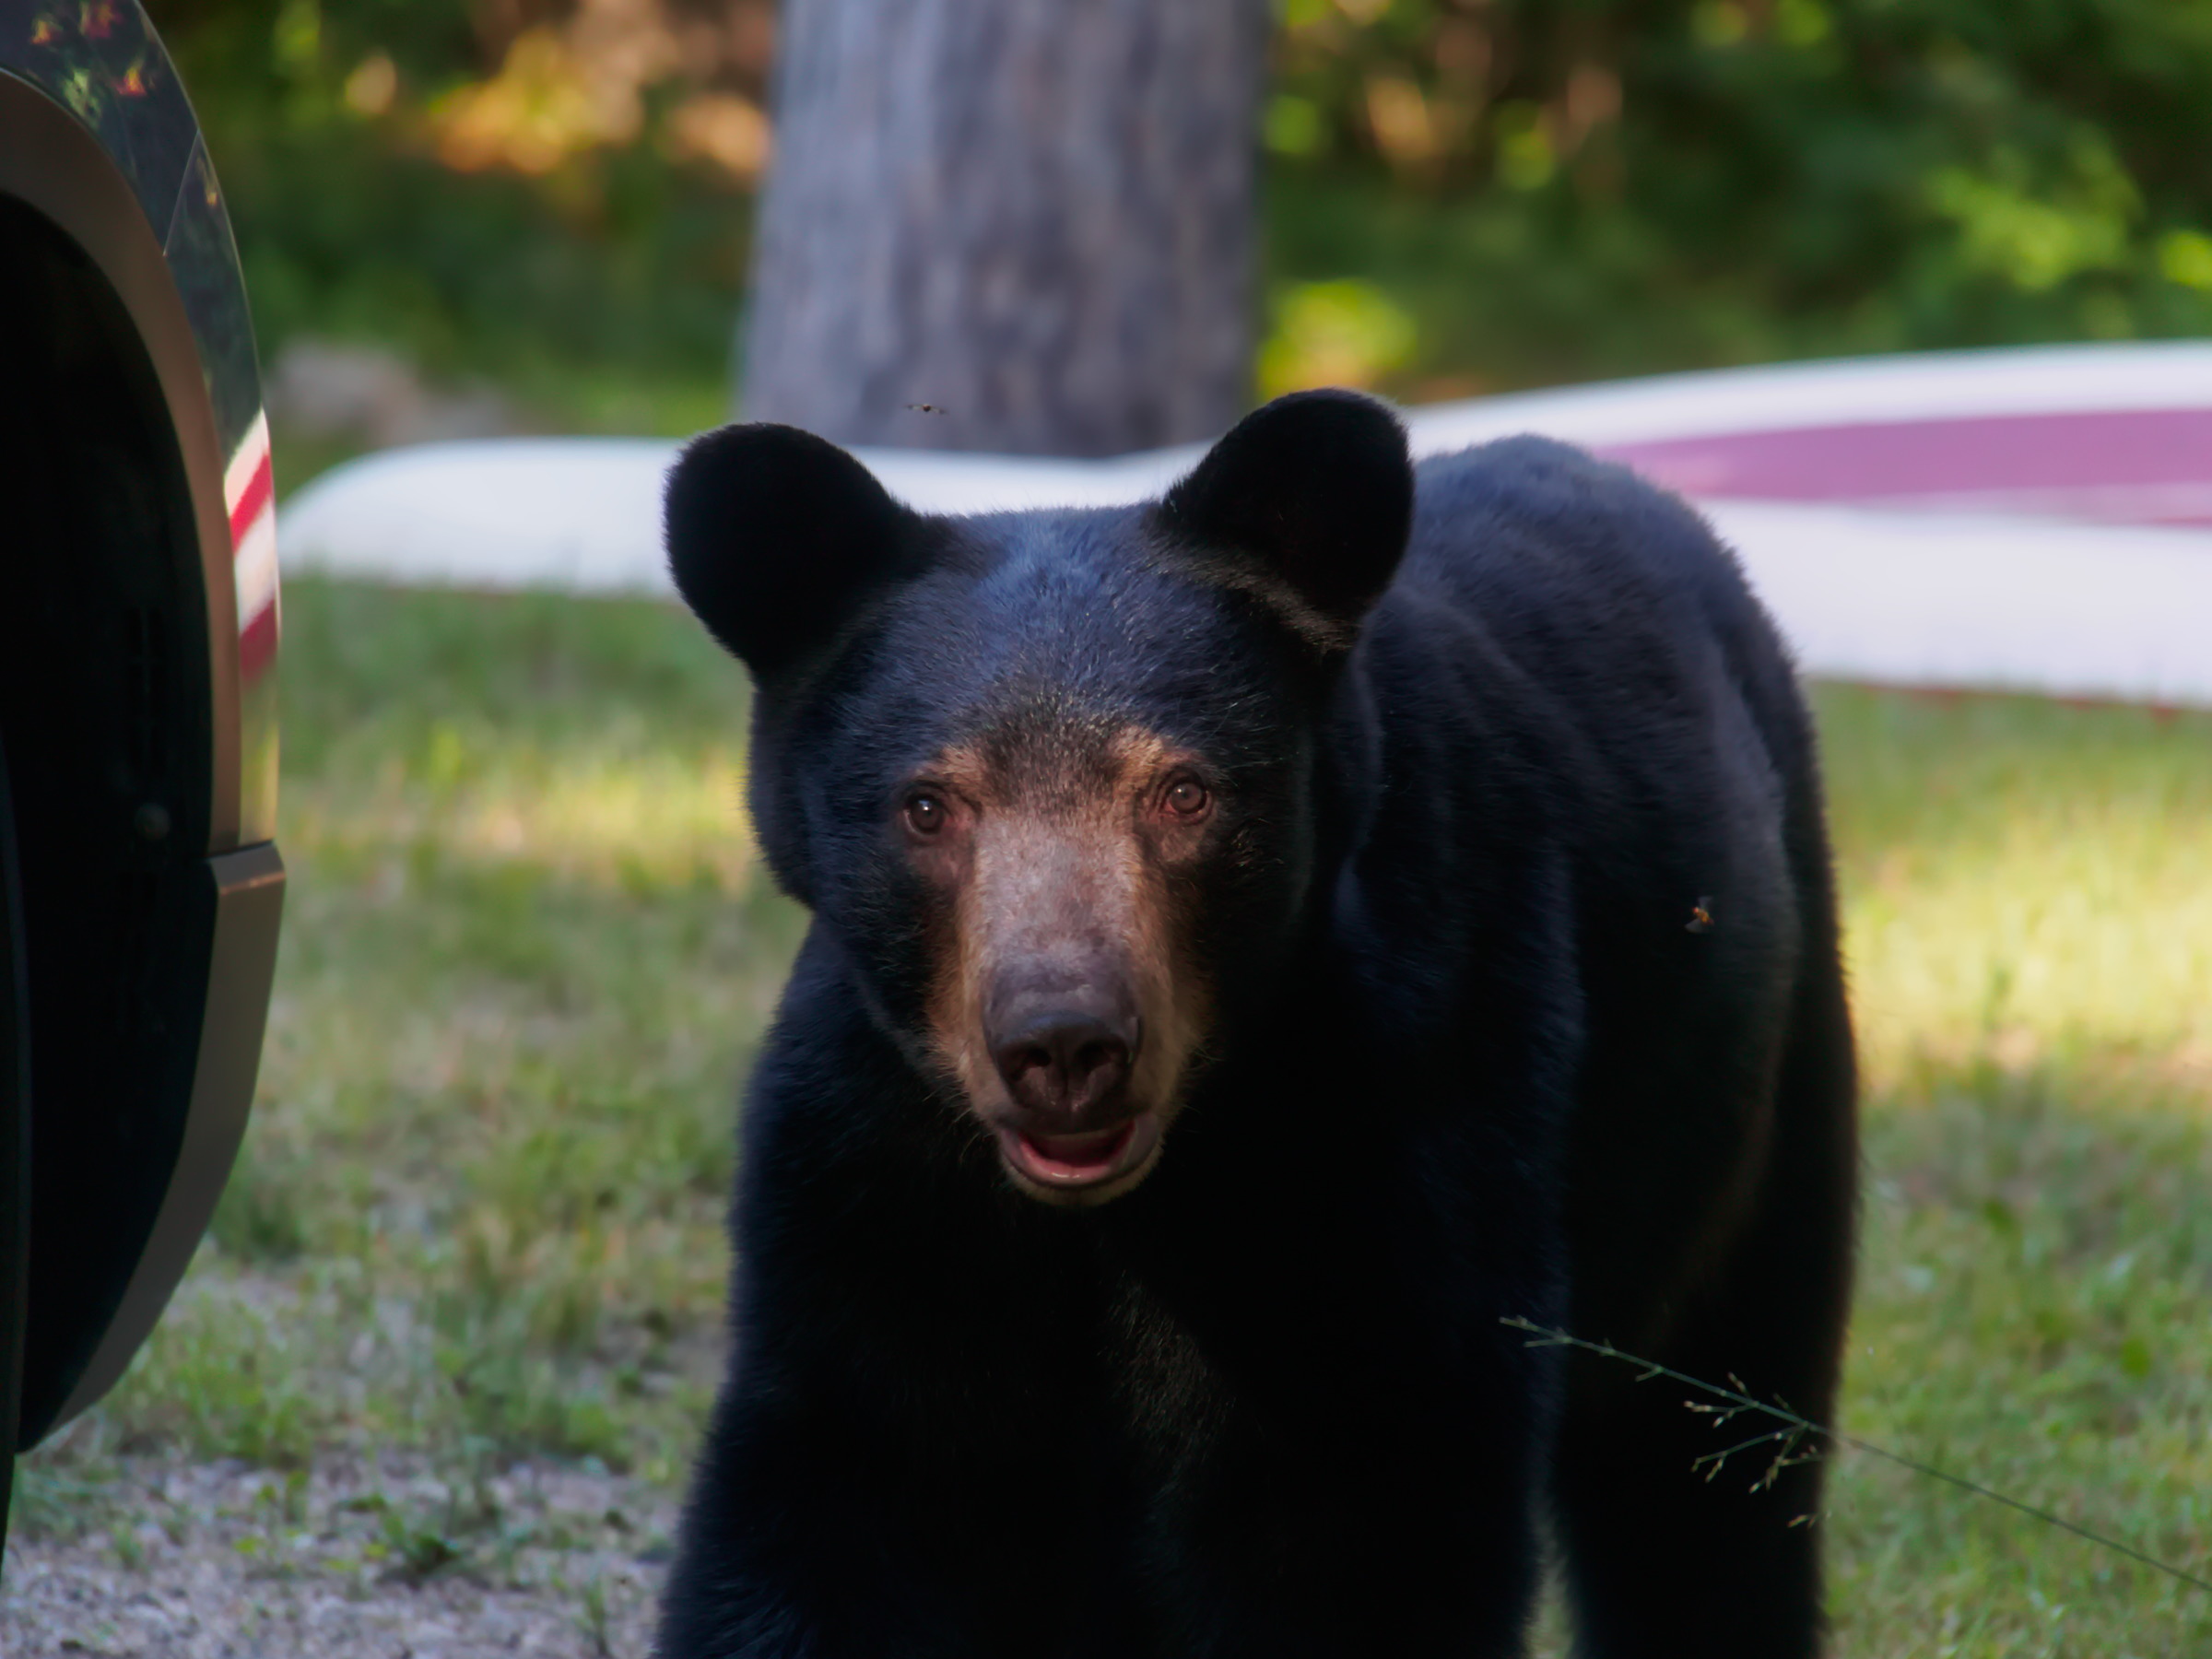 Young black bear in yard